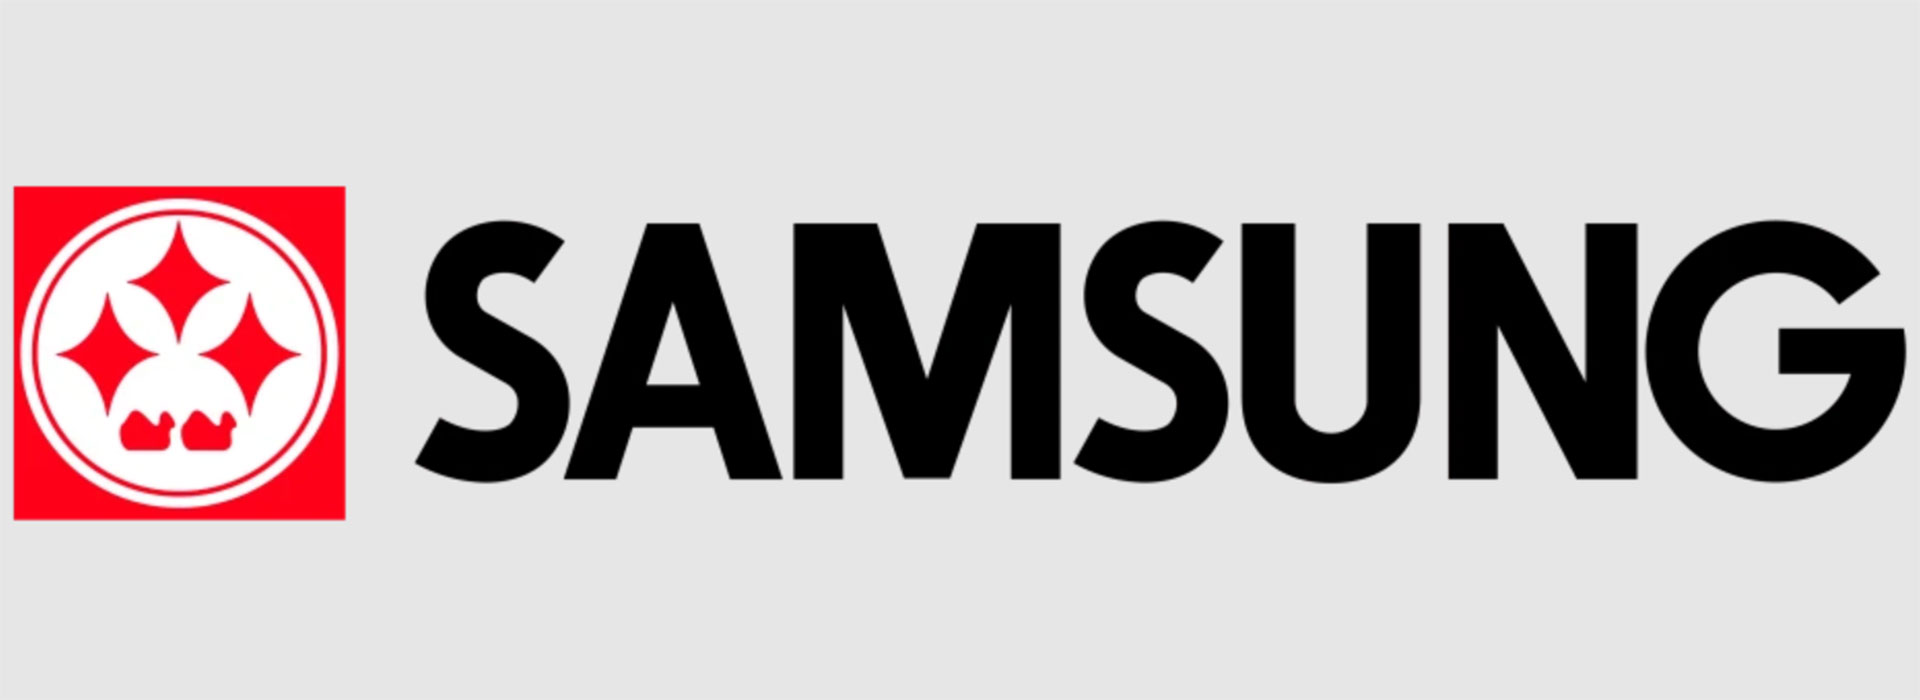 The second Samsung logo